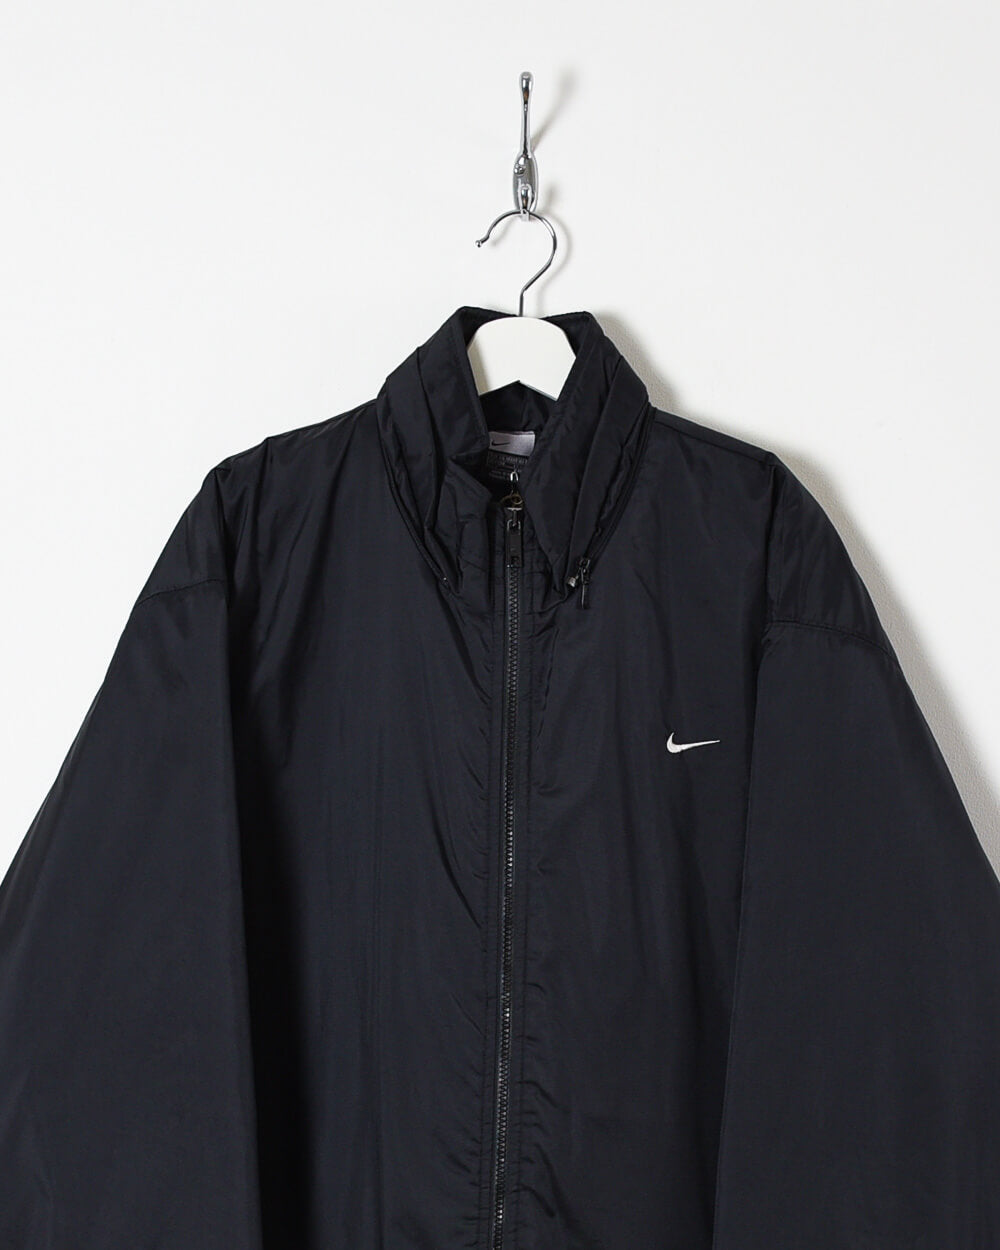 Black Nike Winter Coat -  XX-Large